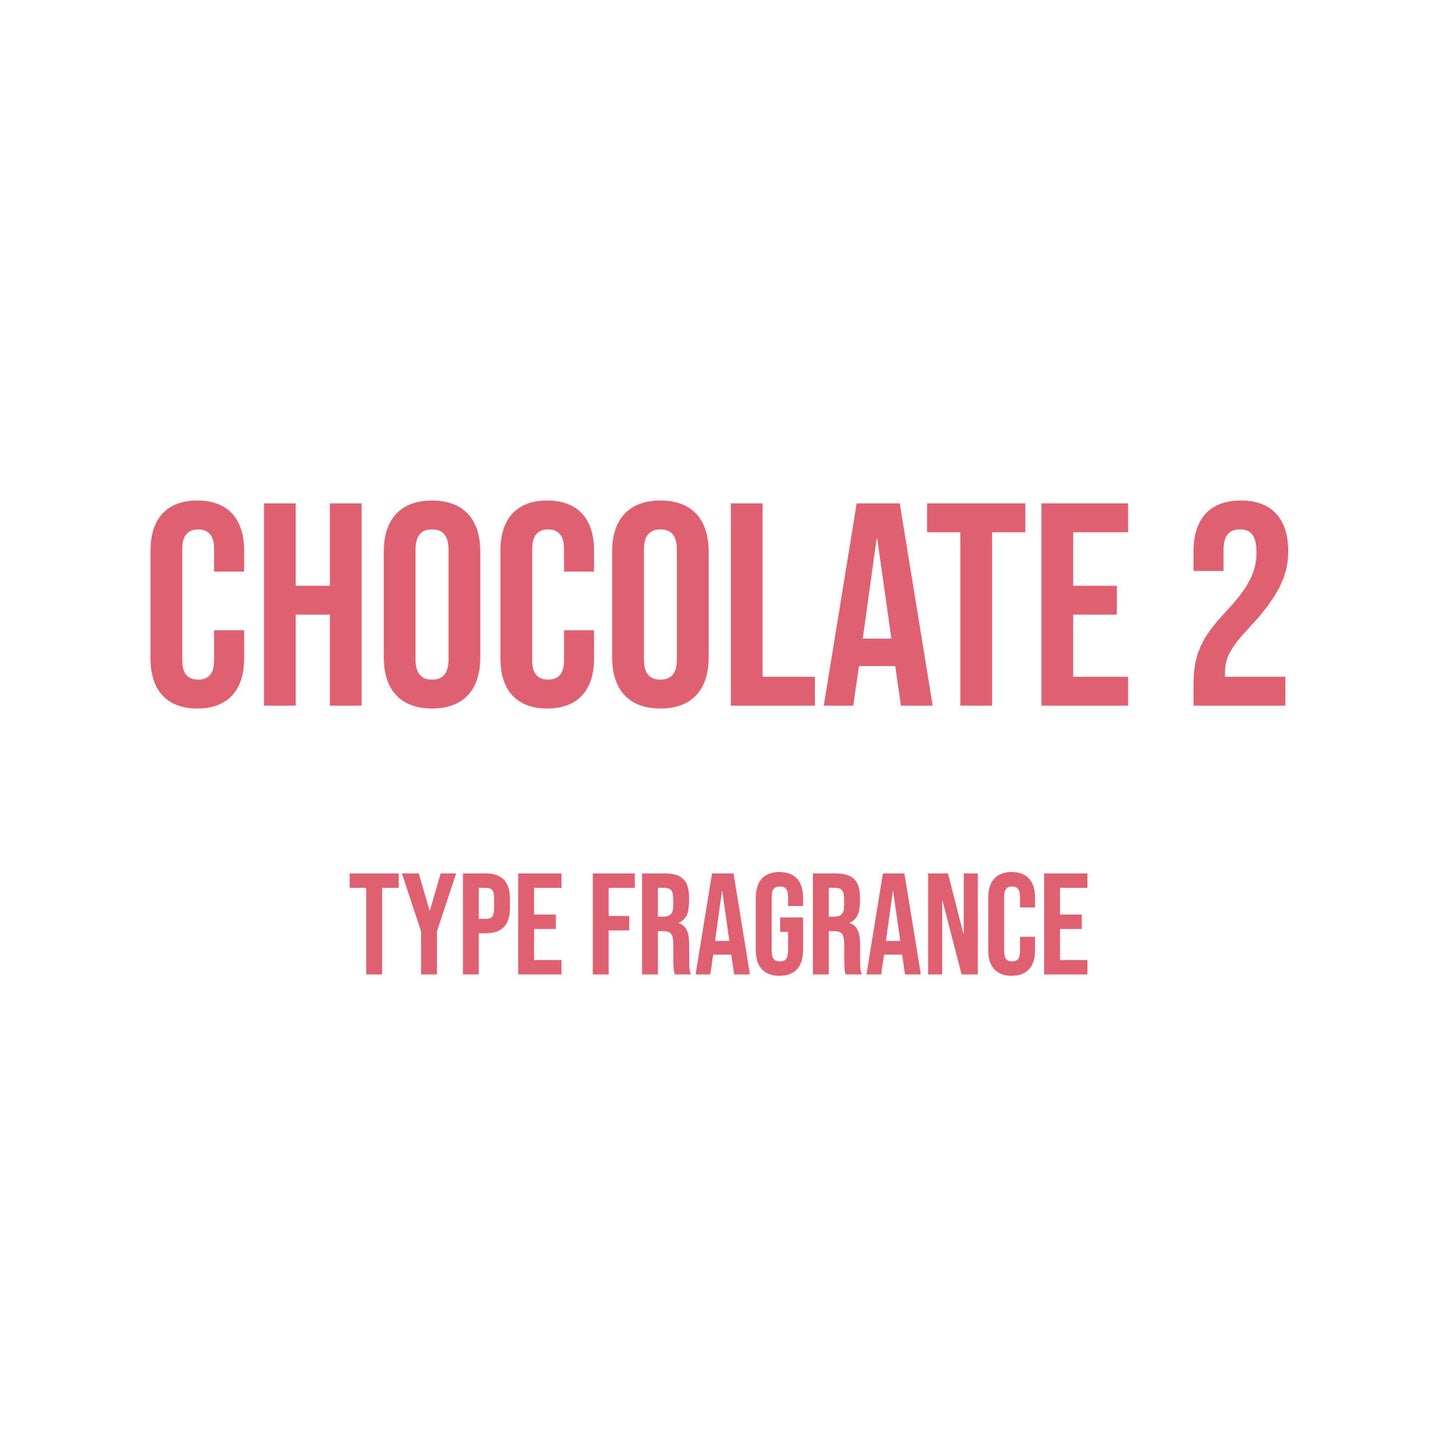 Chocolate 2 Type Fragrance